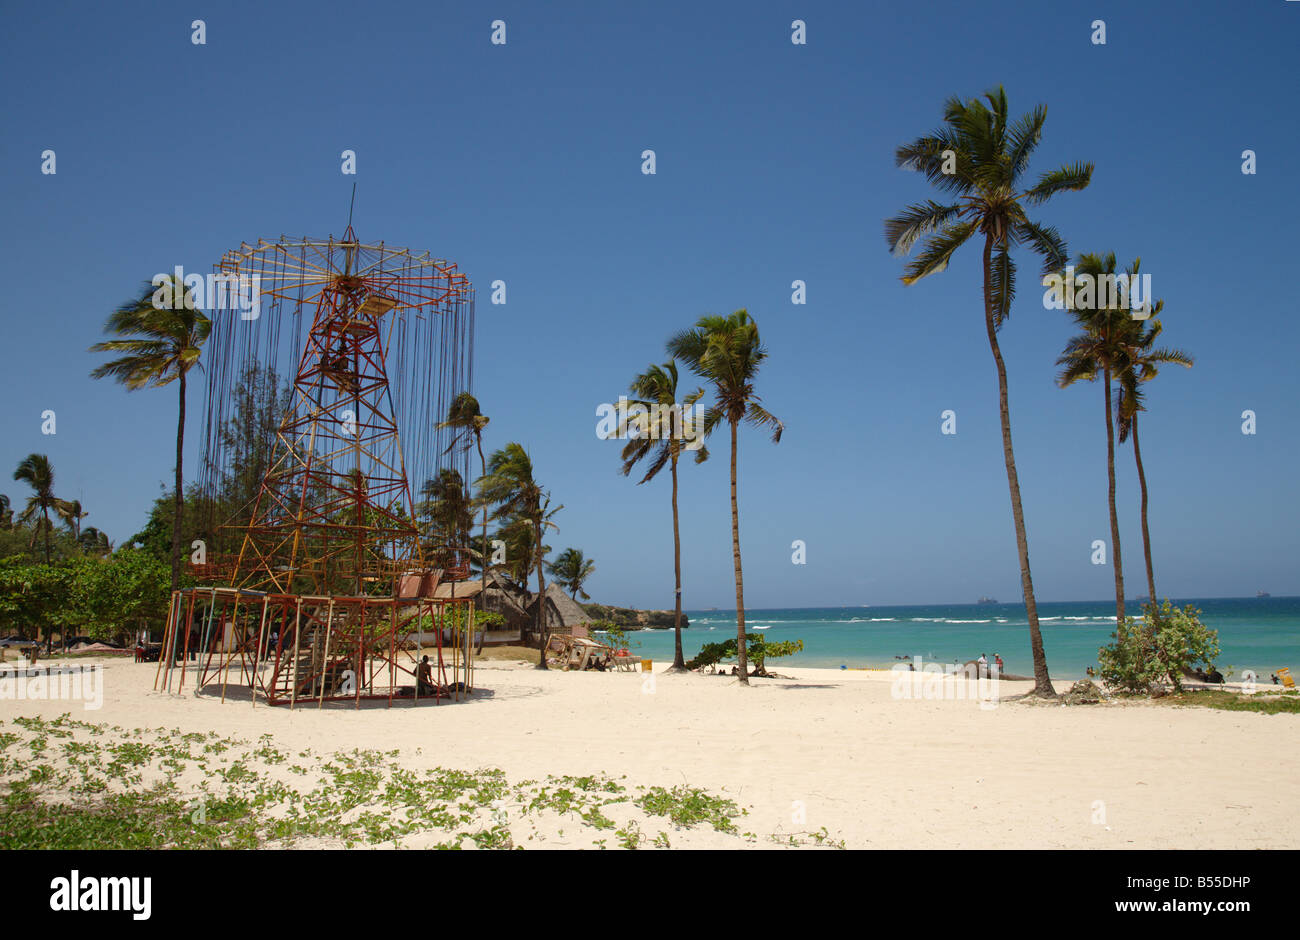 Coco beach in dar es Salaam/ Tanzania Stock Photo